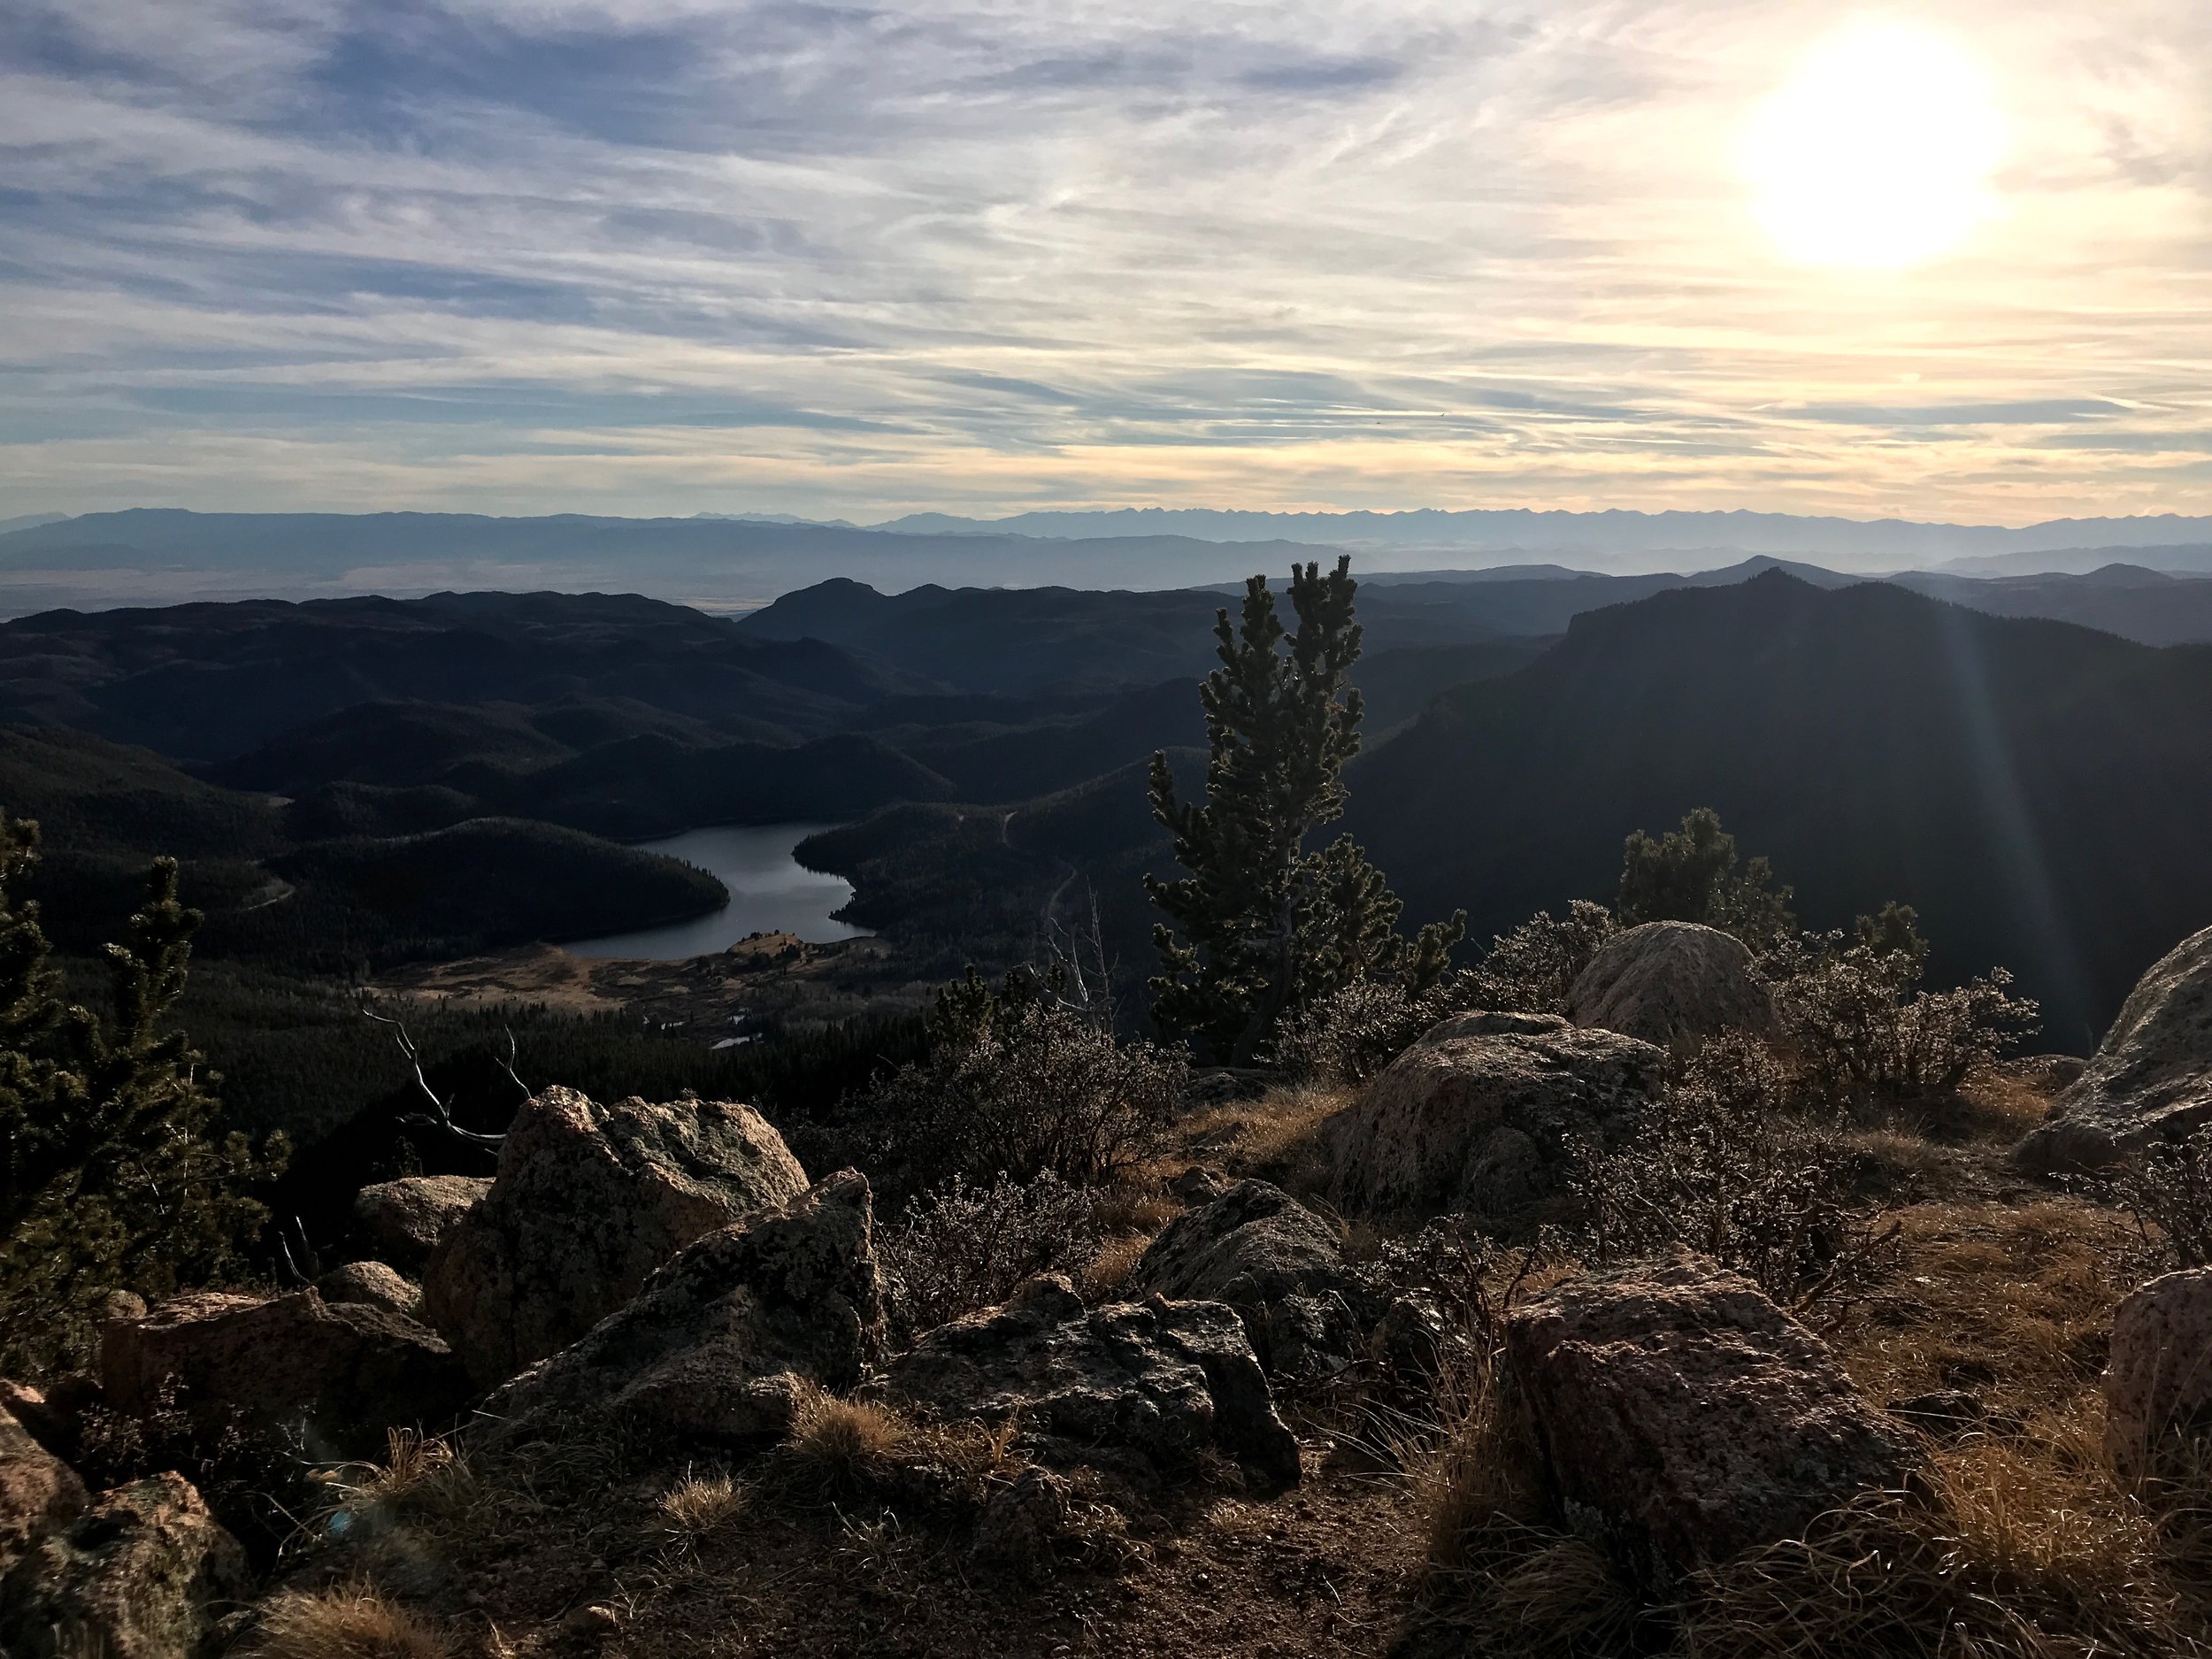  Mount Rosa, Colorado&nbsp; 